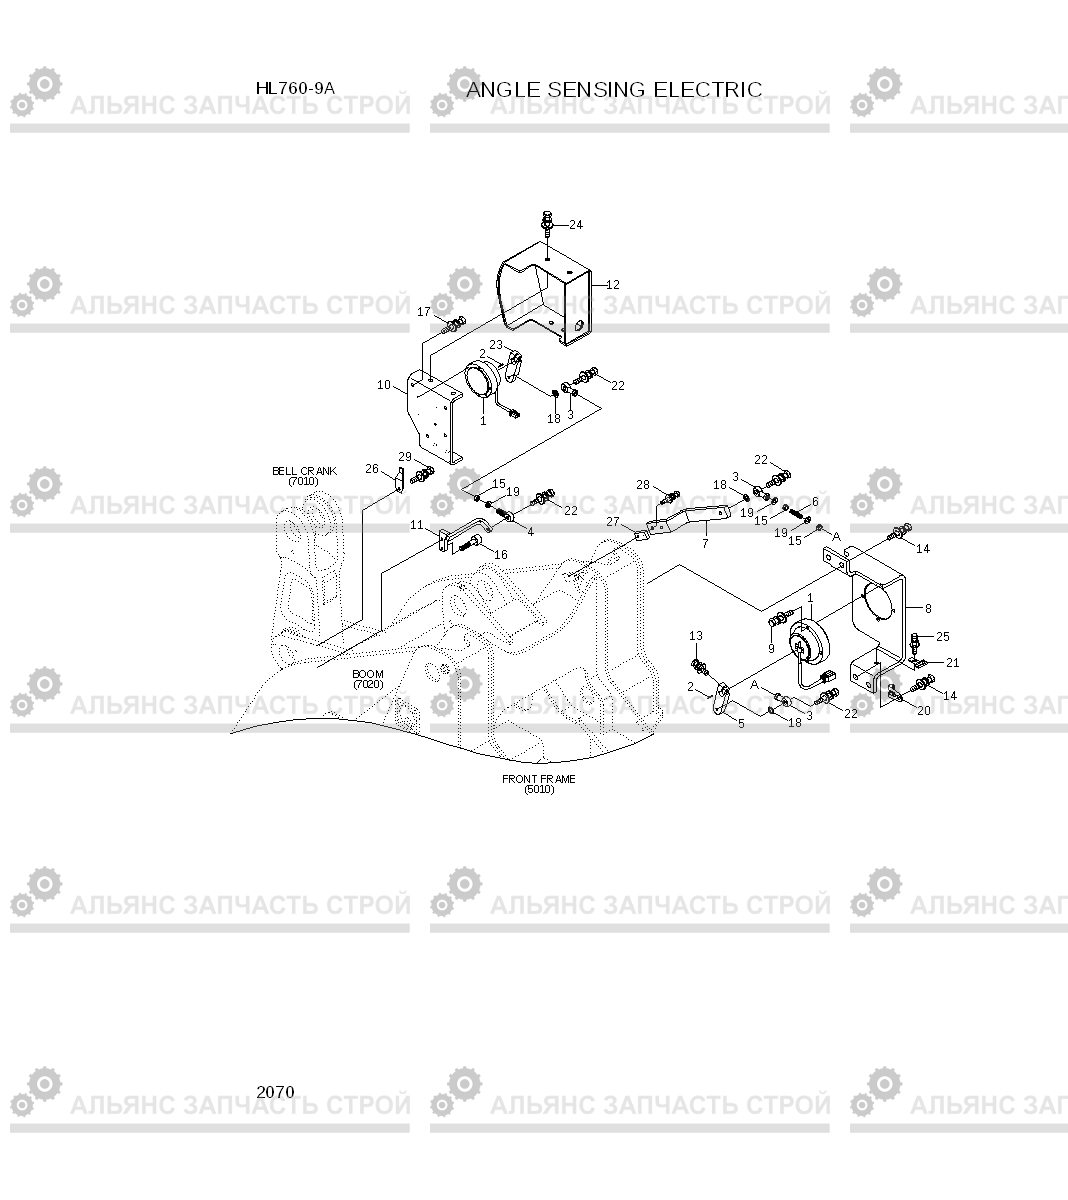 2070 ANGLE SENSING ELECTRIC HL760-9A(W/HANDLER), Hyundai